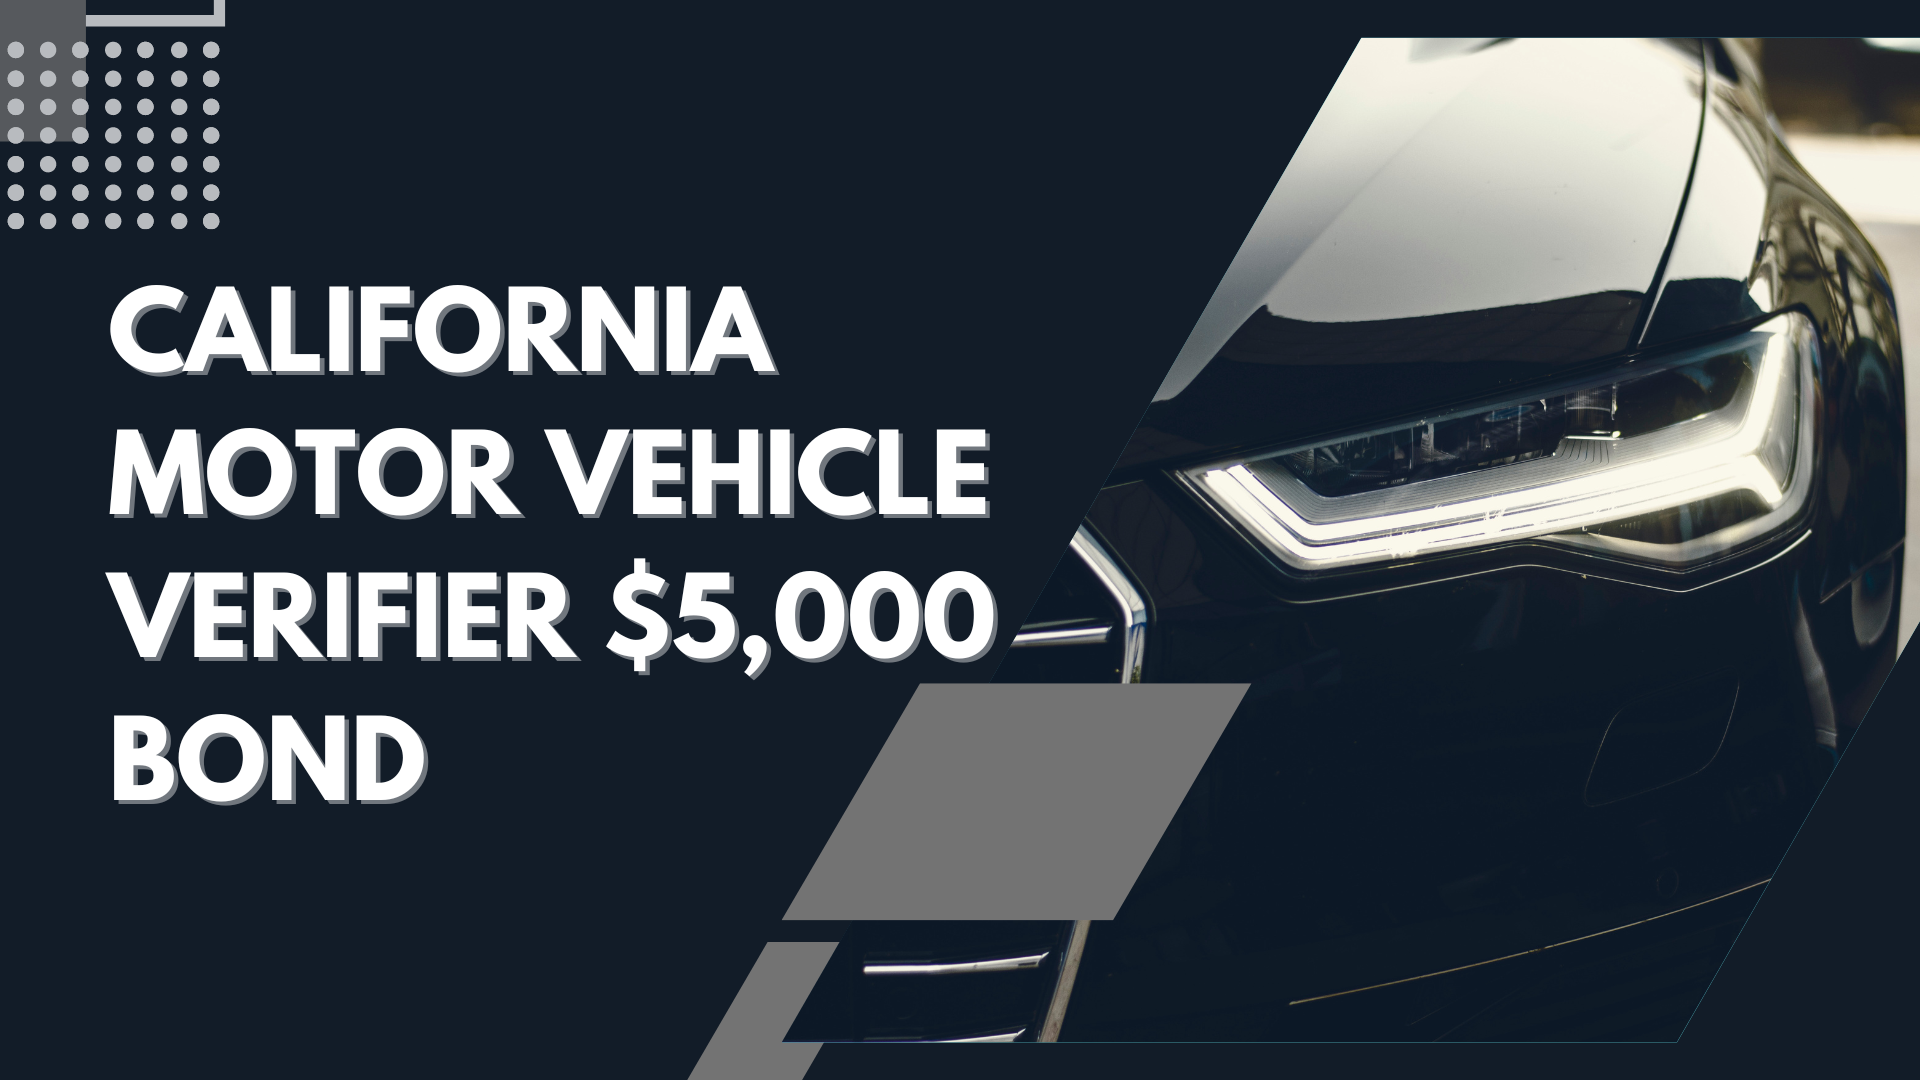 Surety Bond-California Motor Vehicle Verifier $5,000 Bond